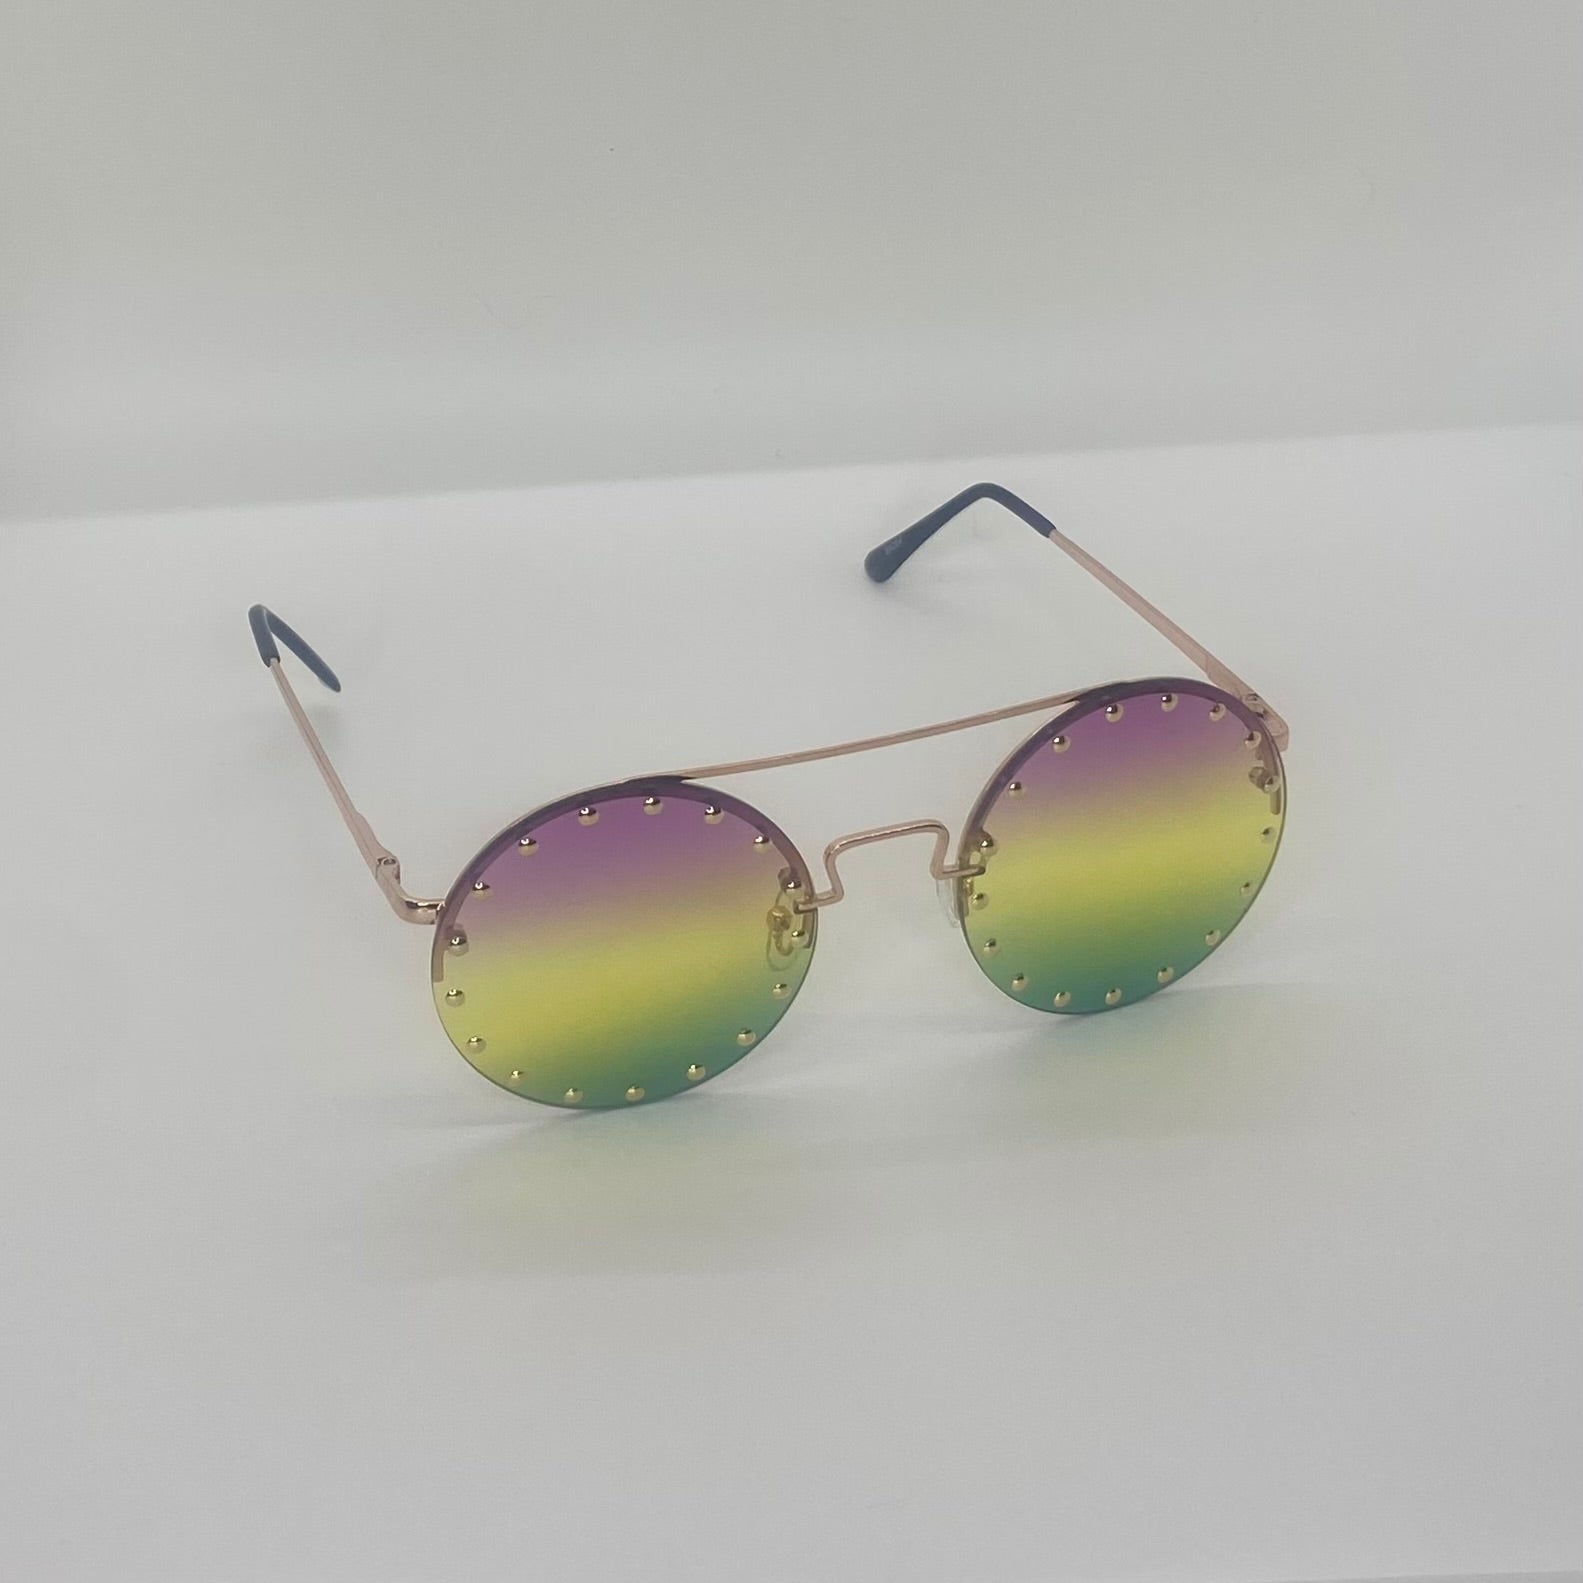 Deluxe Gold Hippie Sunglasses